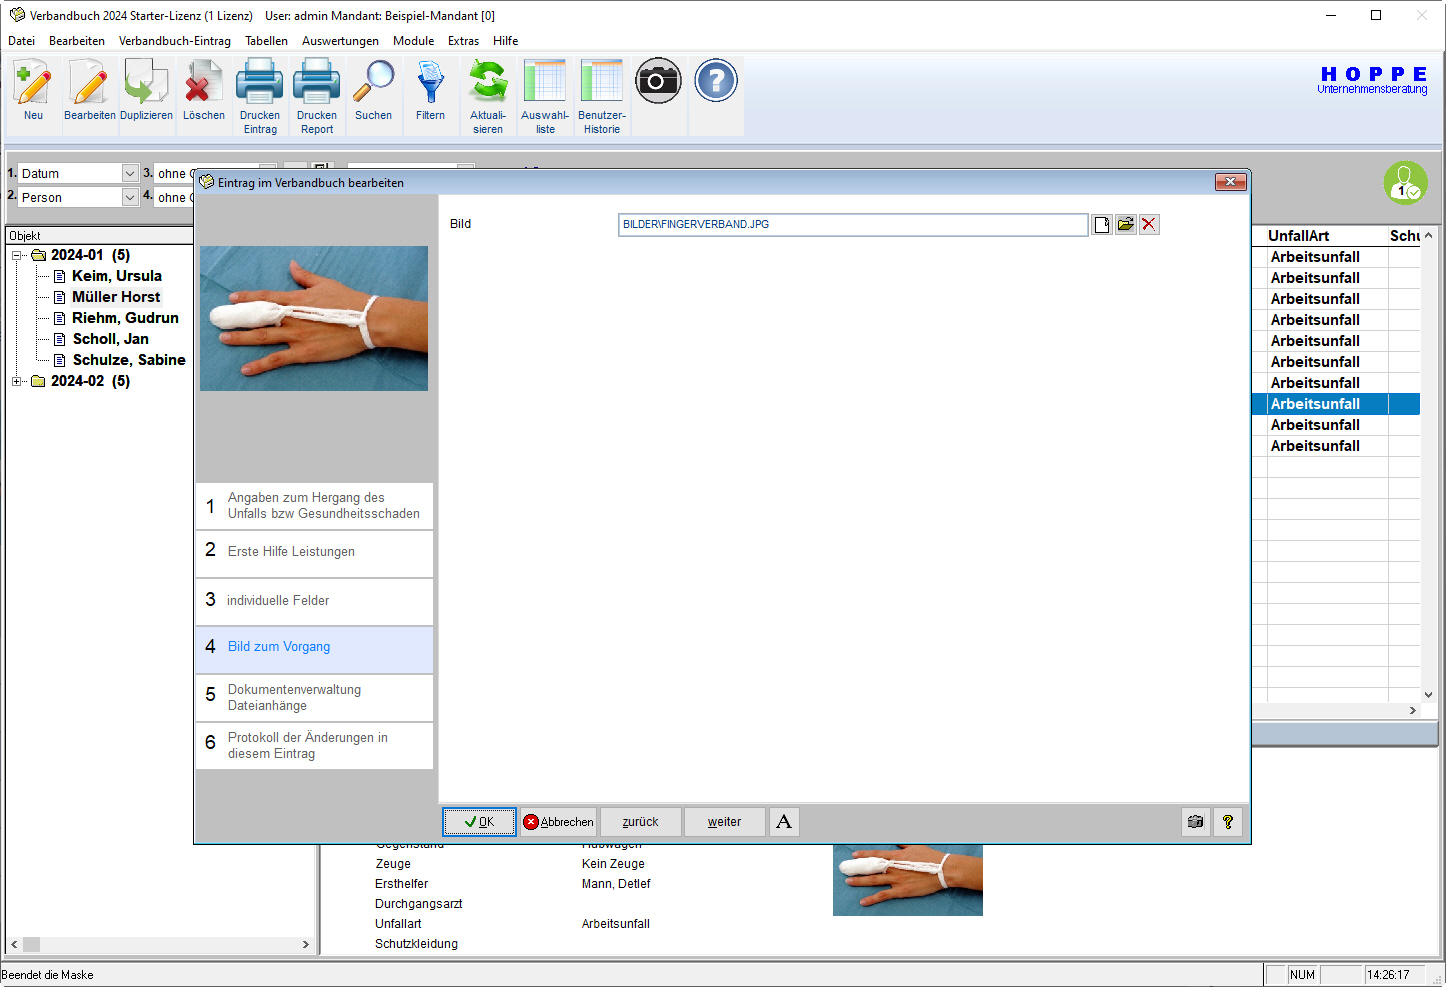 Screenshot erste-hilfe-leistungen Verbandbuchsoftware